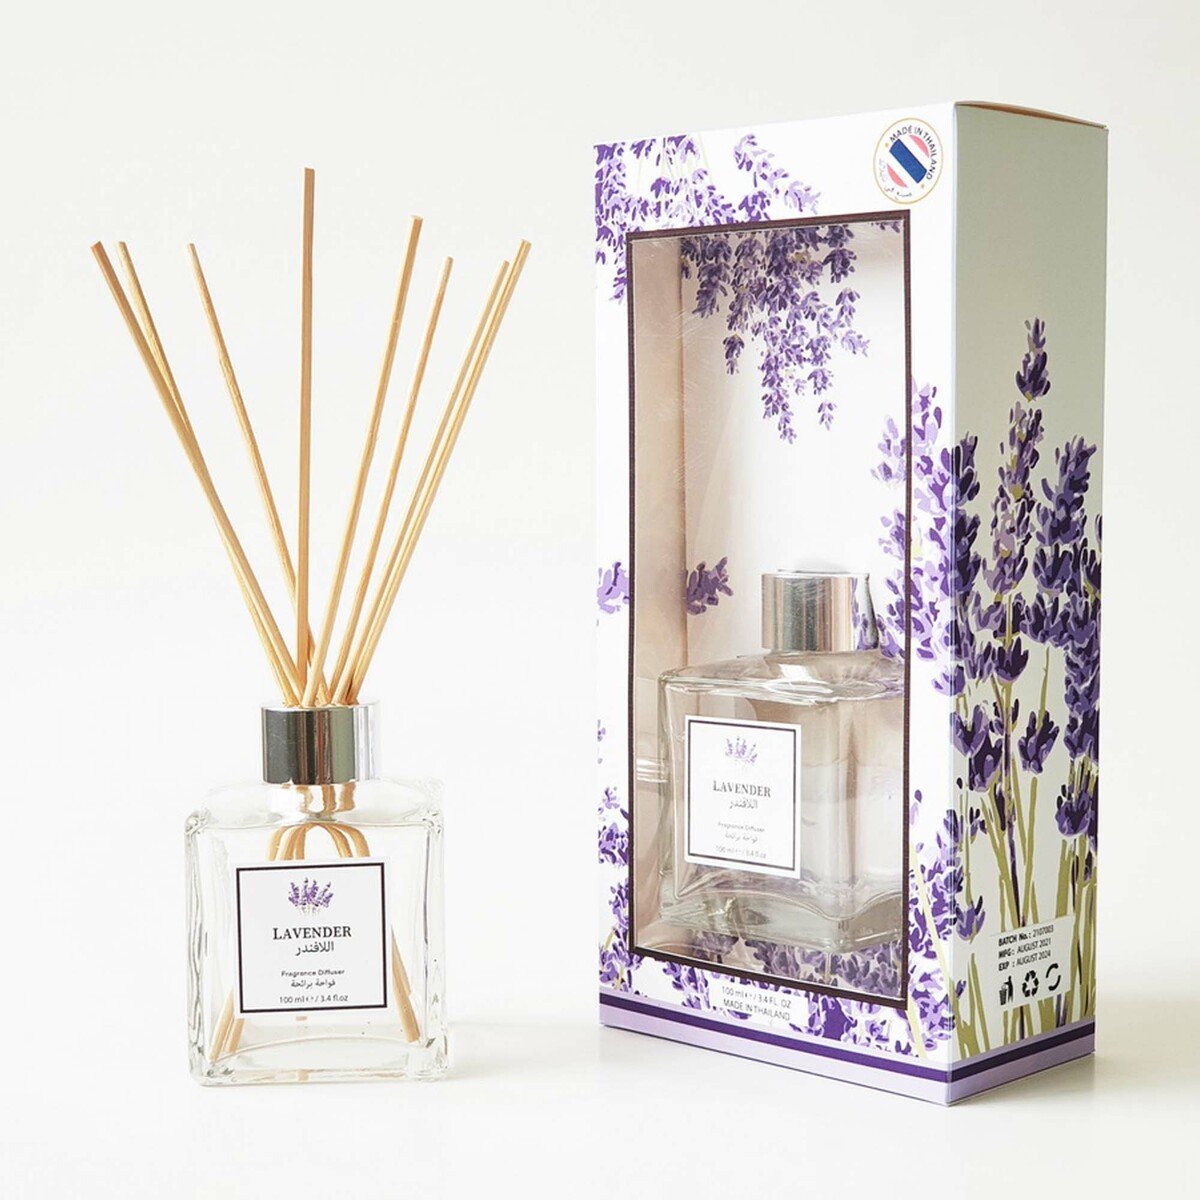 Maple Leaf Fragrance Stick Diffuser Lavender100ml 338